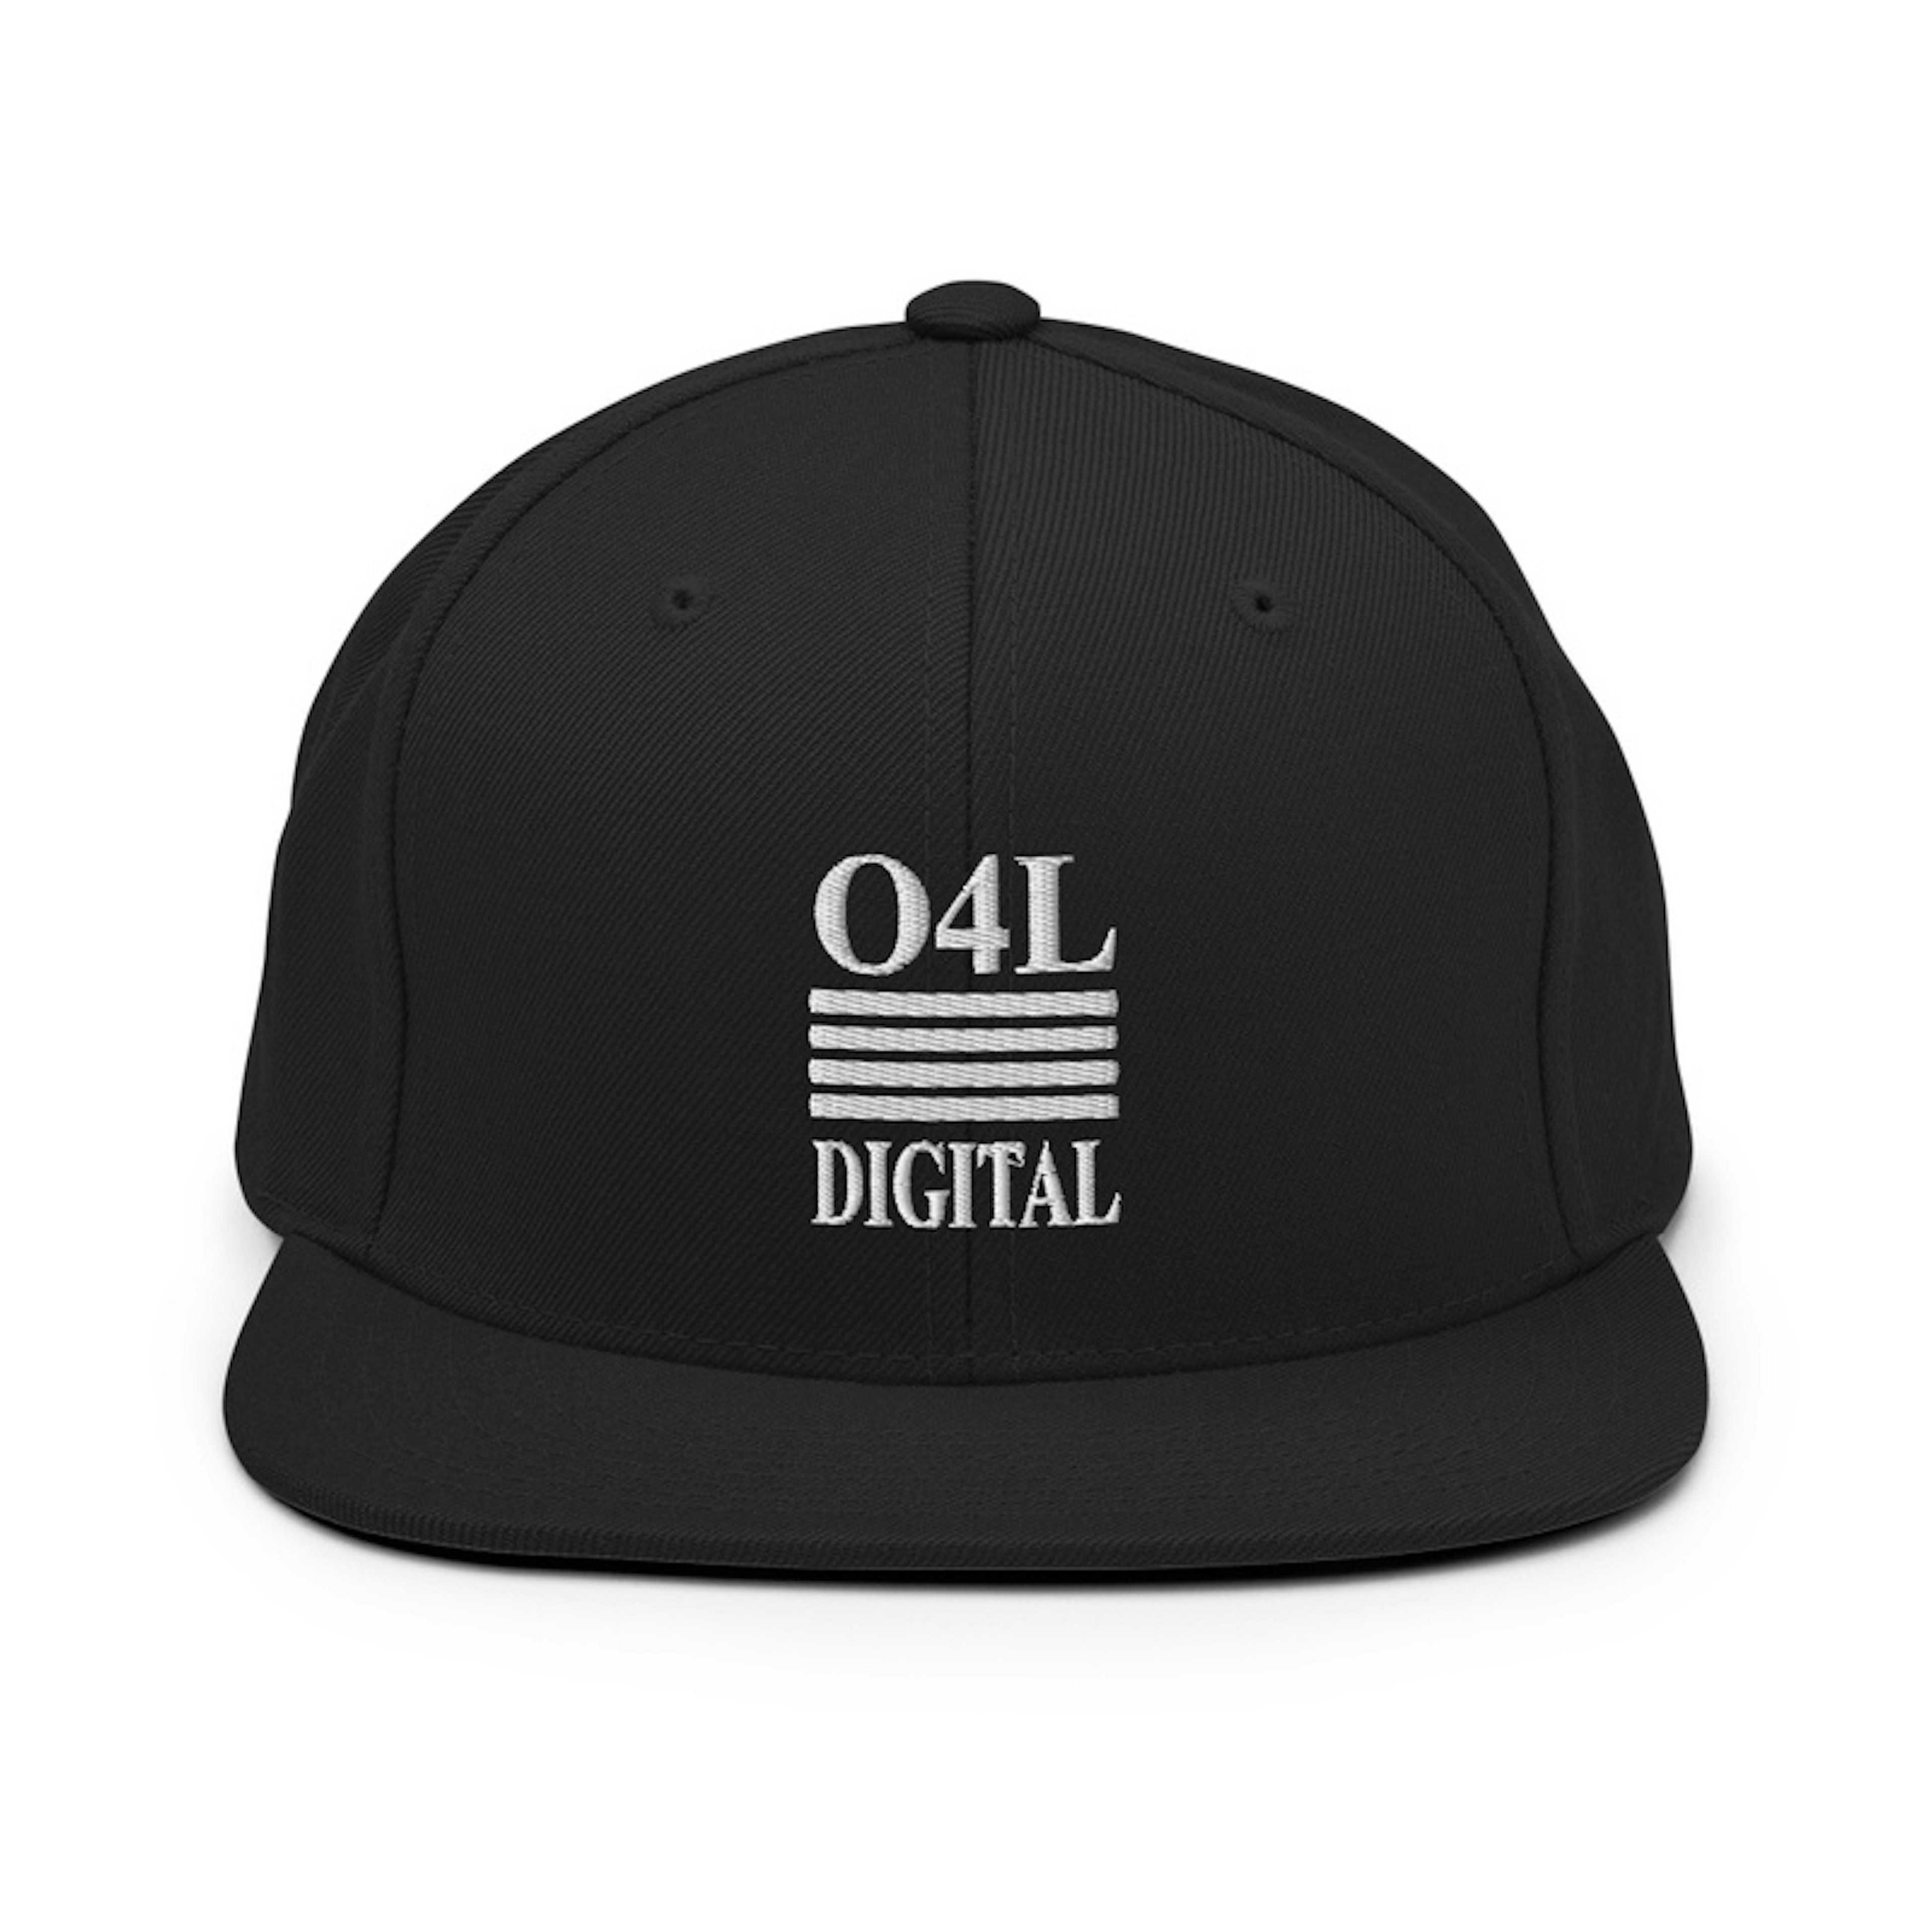 O4L Digital - Snapback - Black